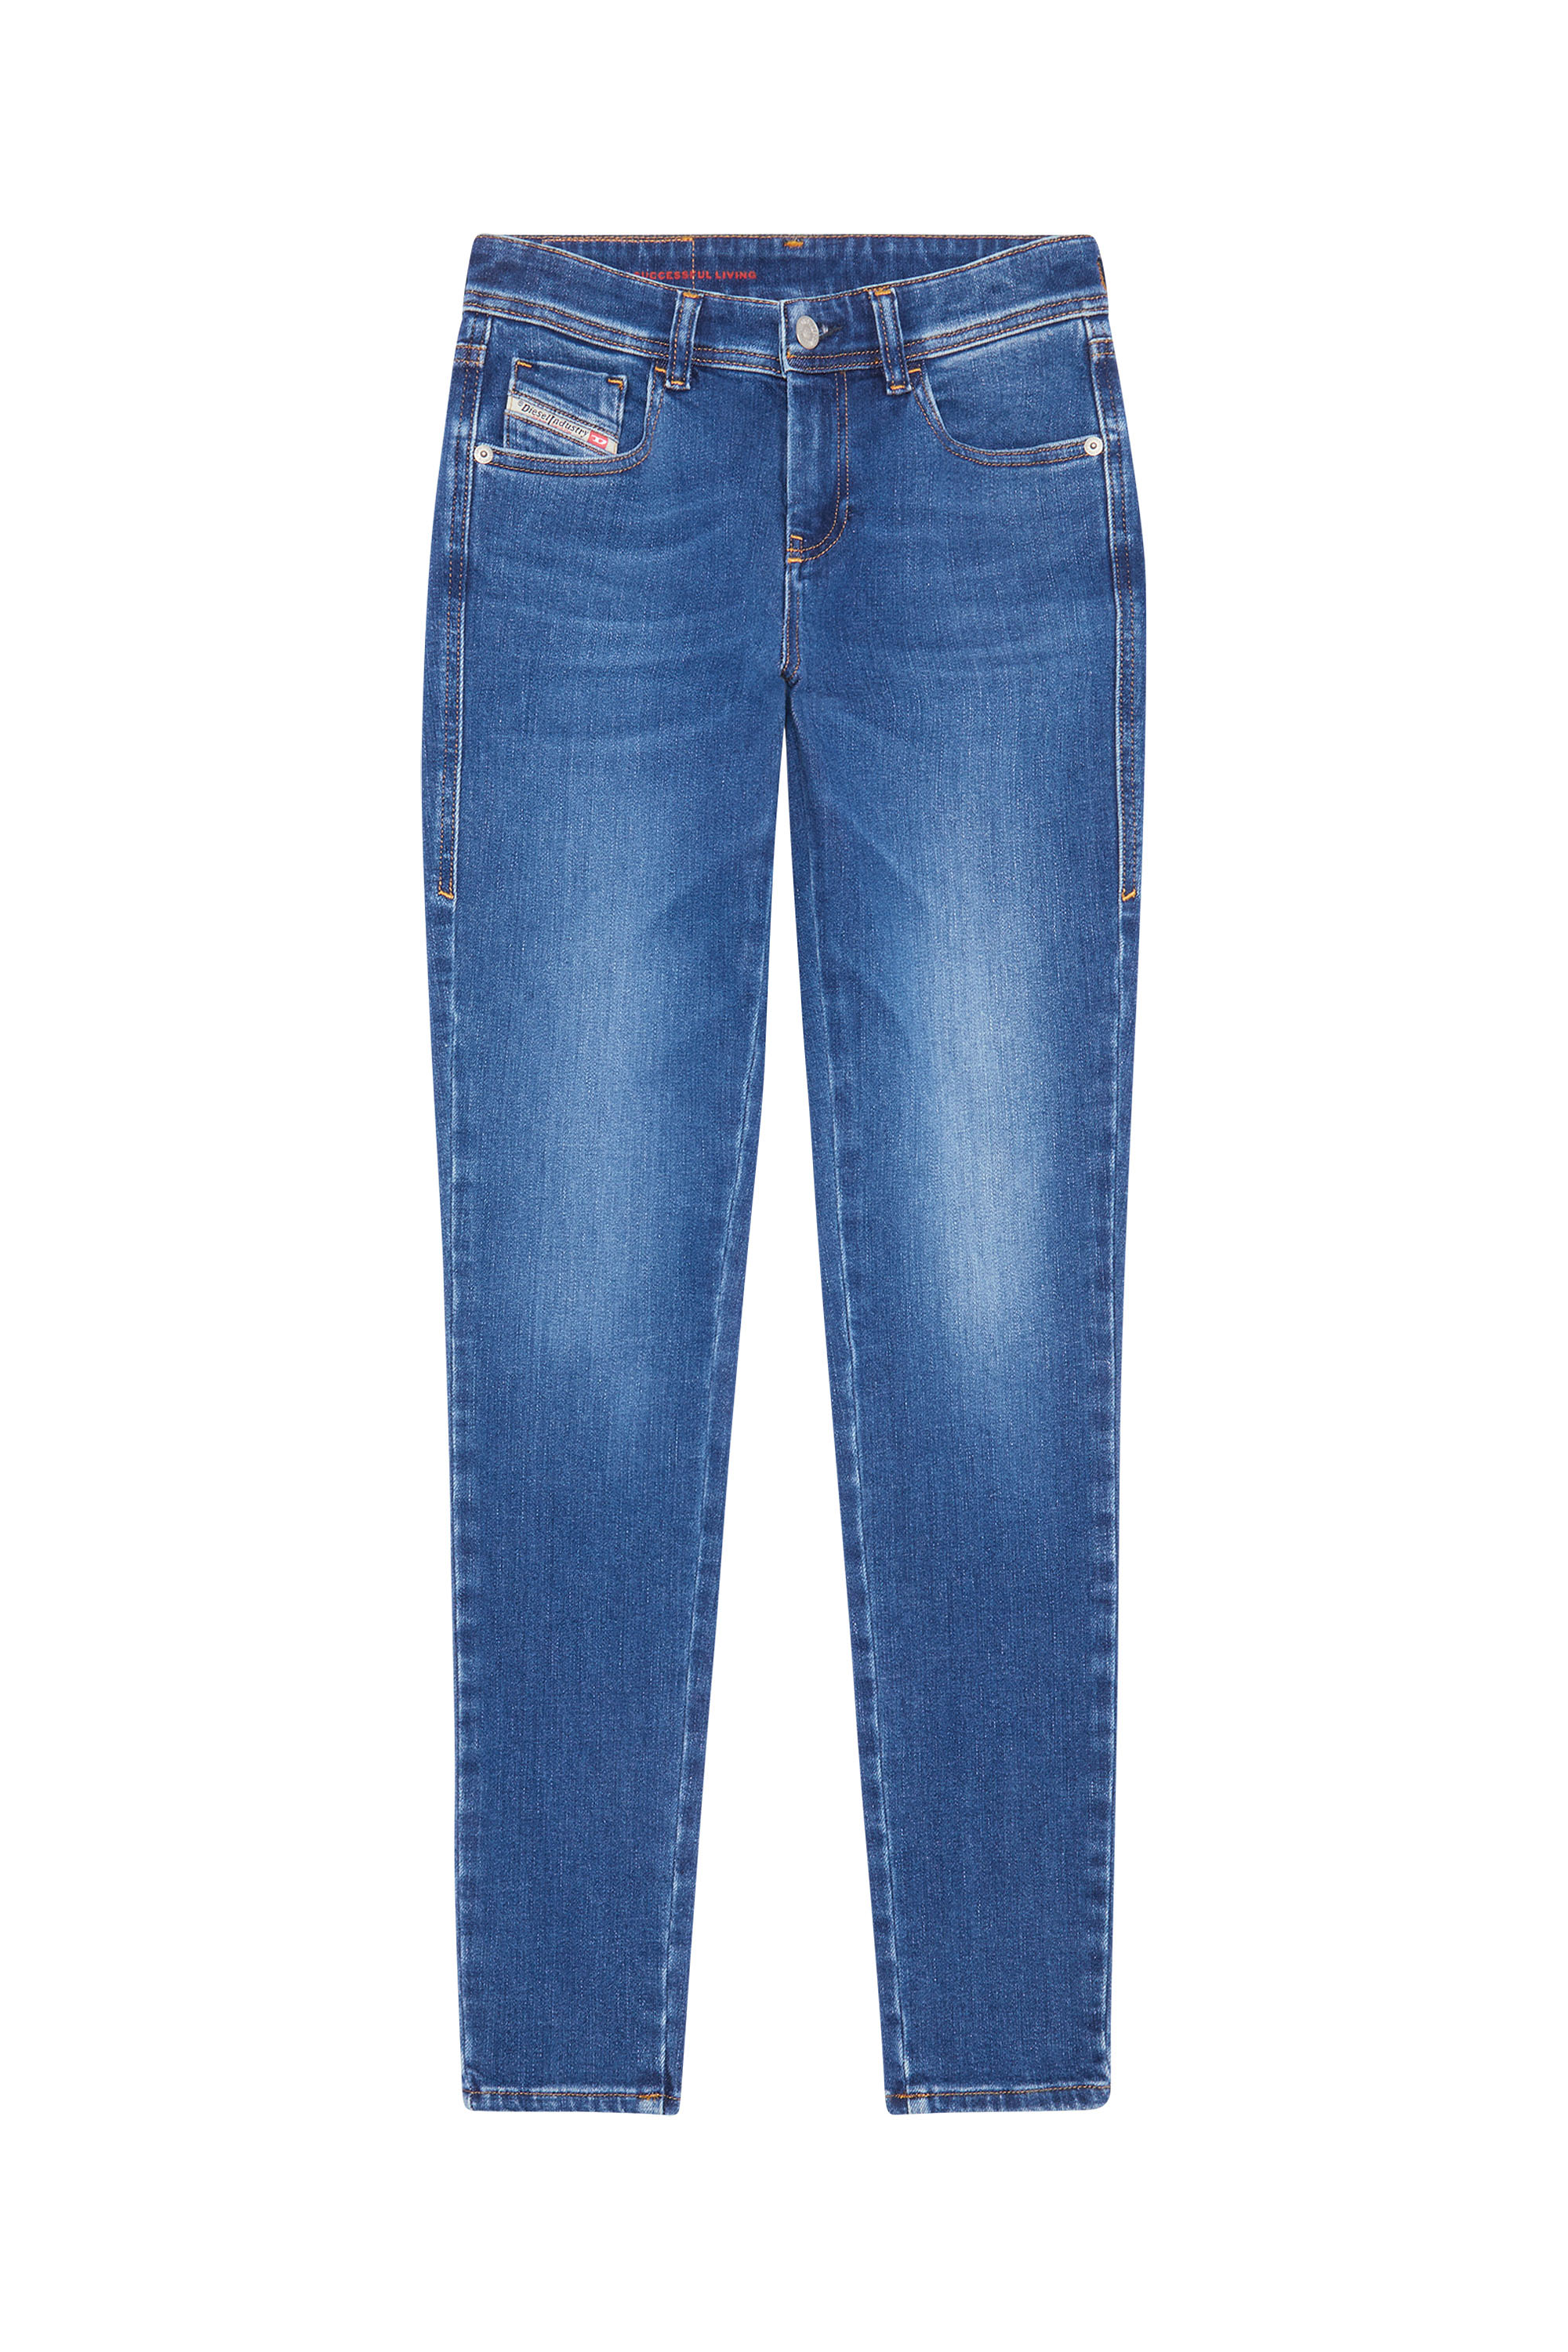 2017 SLANDY 09C21 Super skinny Jeans, Blu medio - Jeans